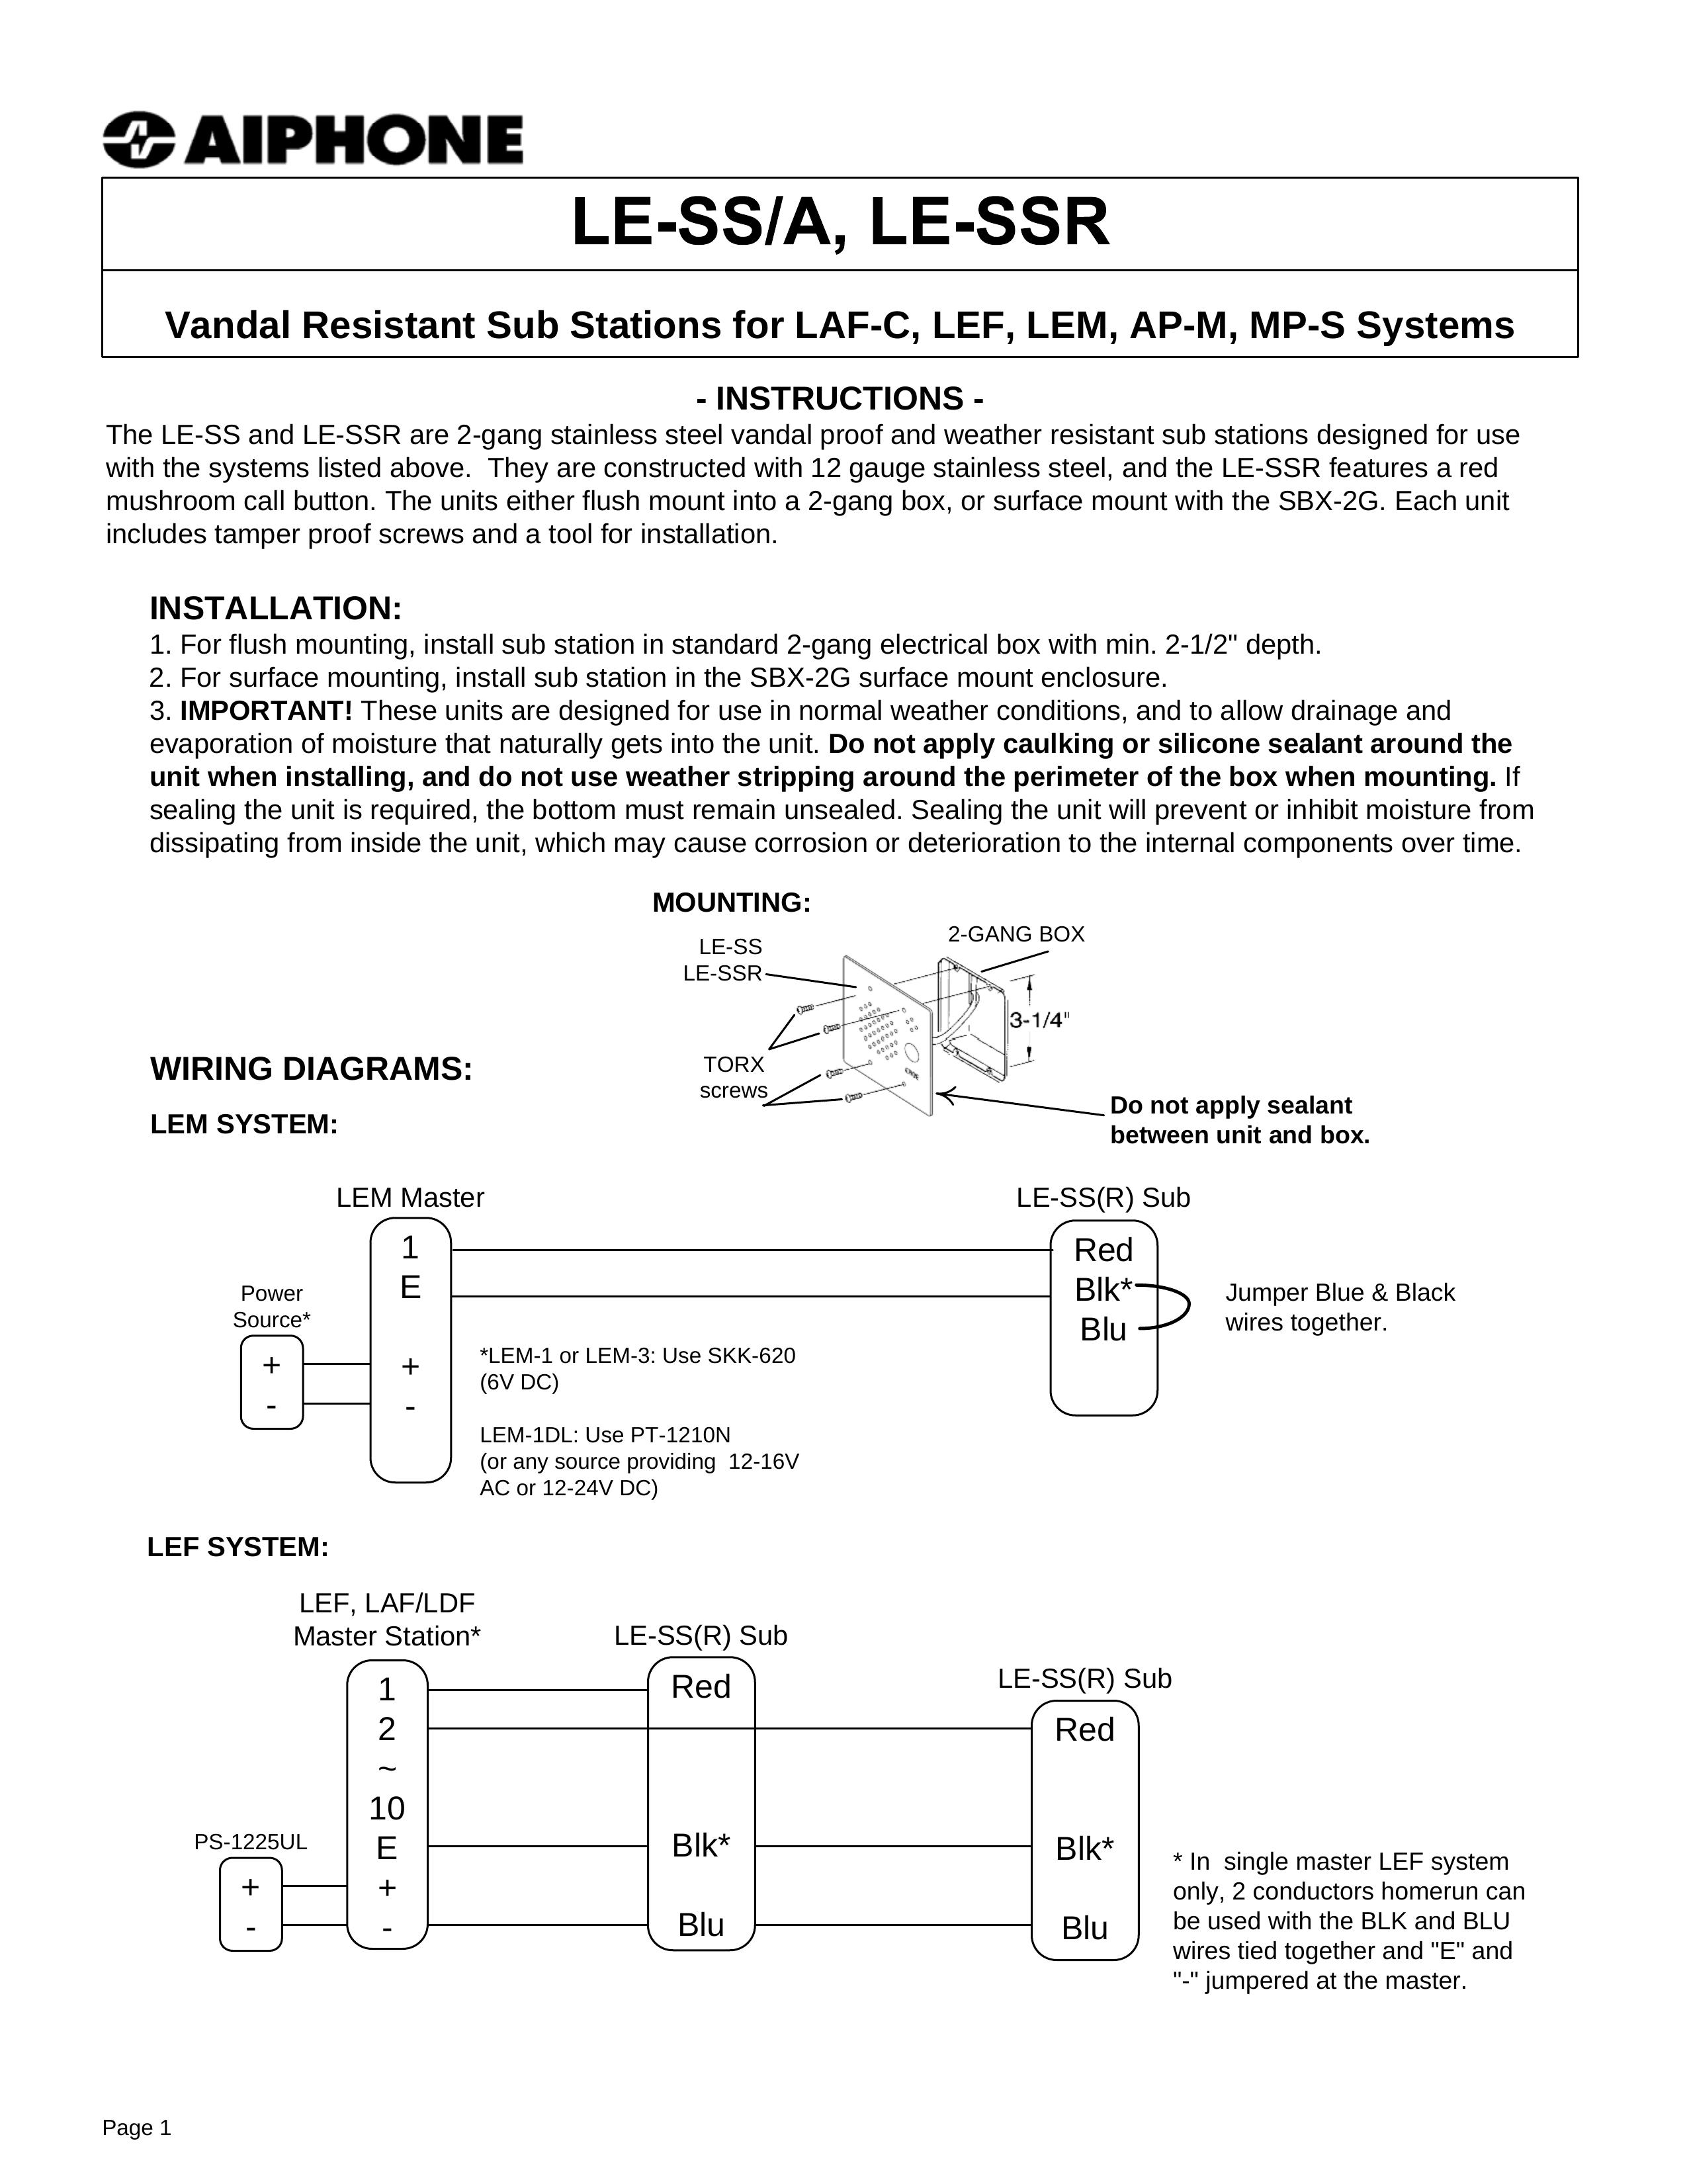 Aiphone LE-SS Security Camera User Manual